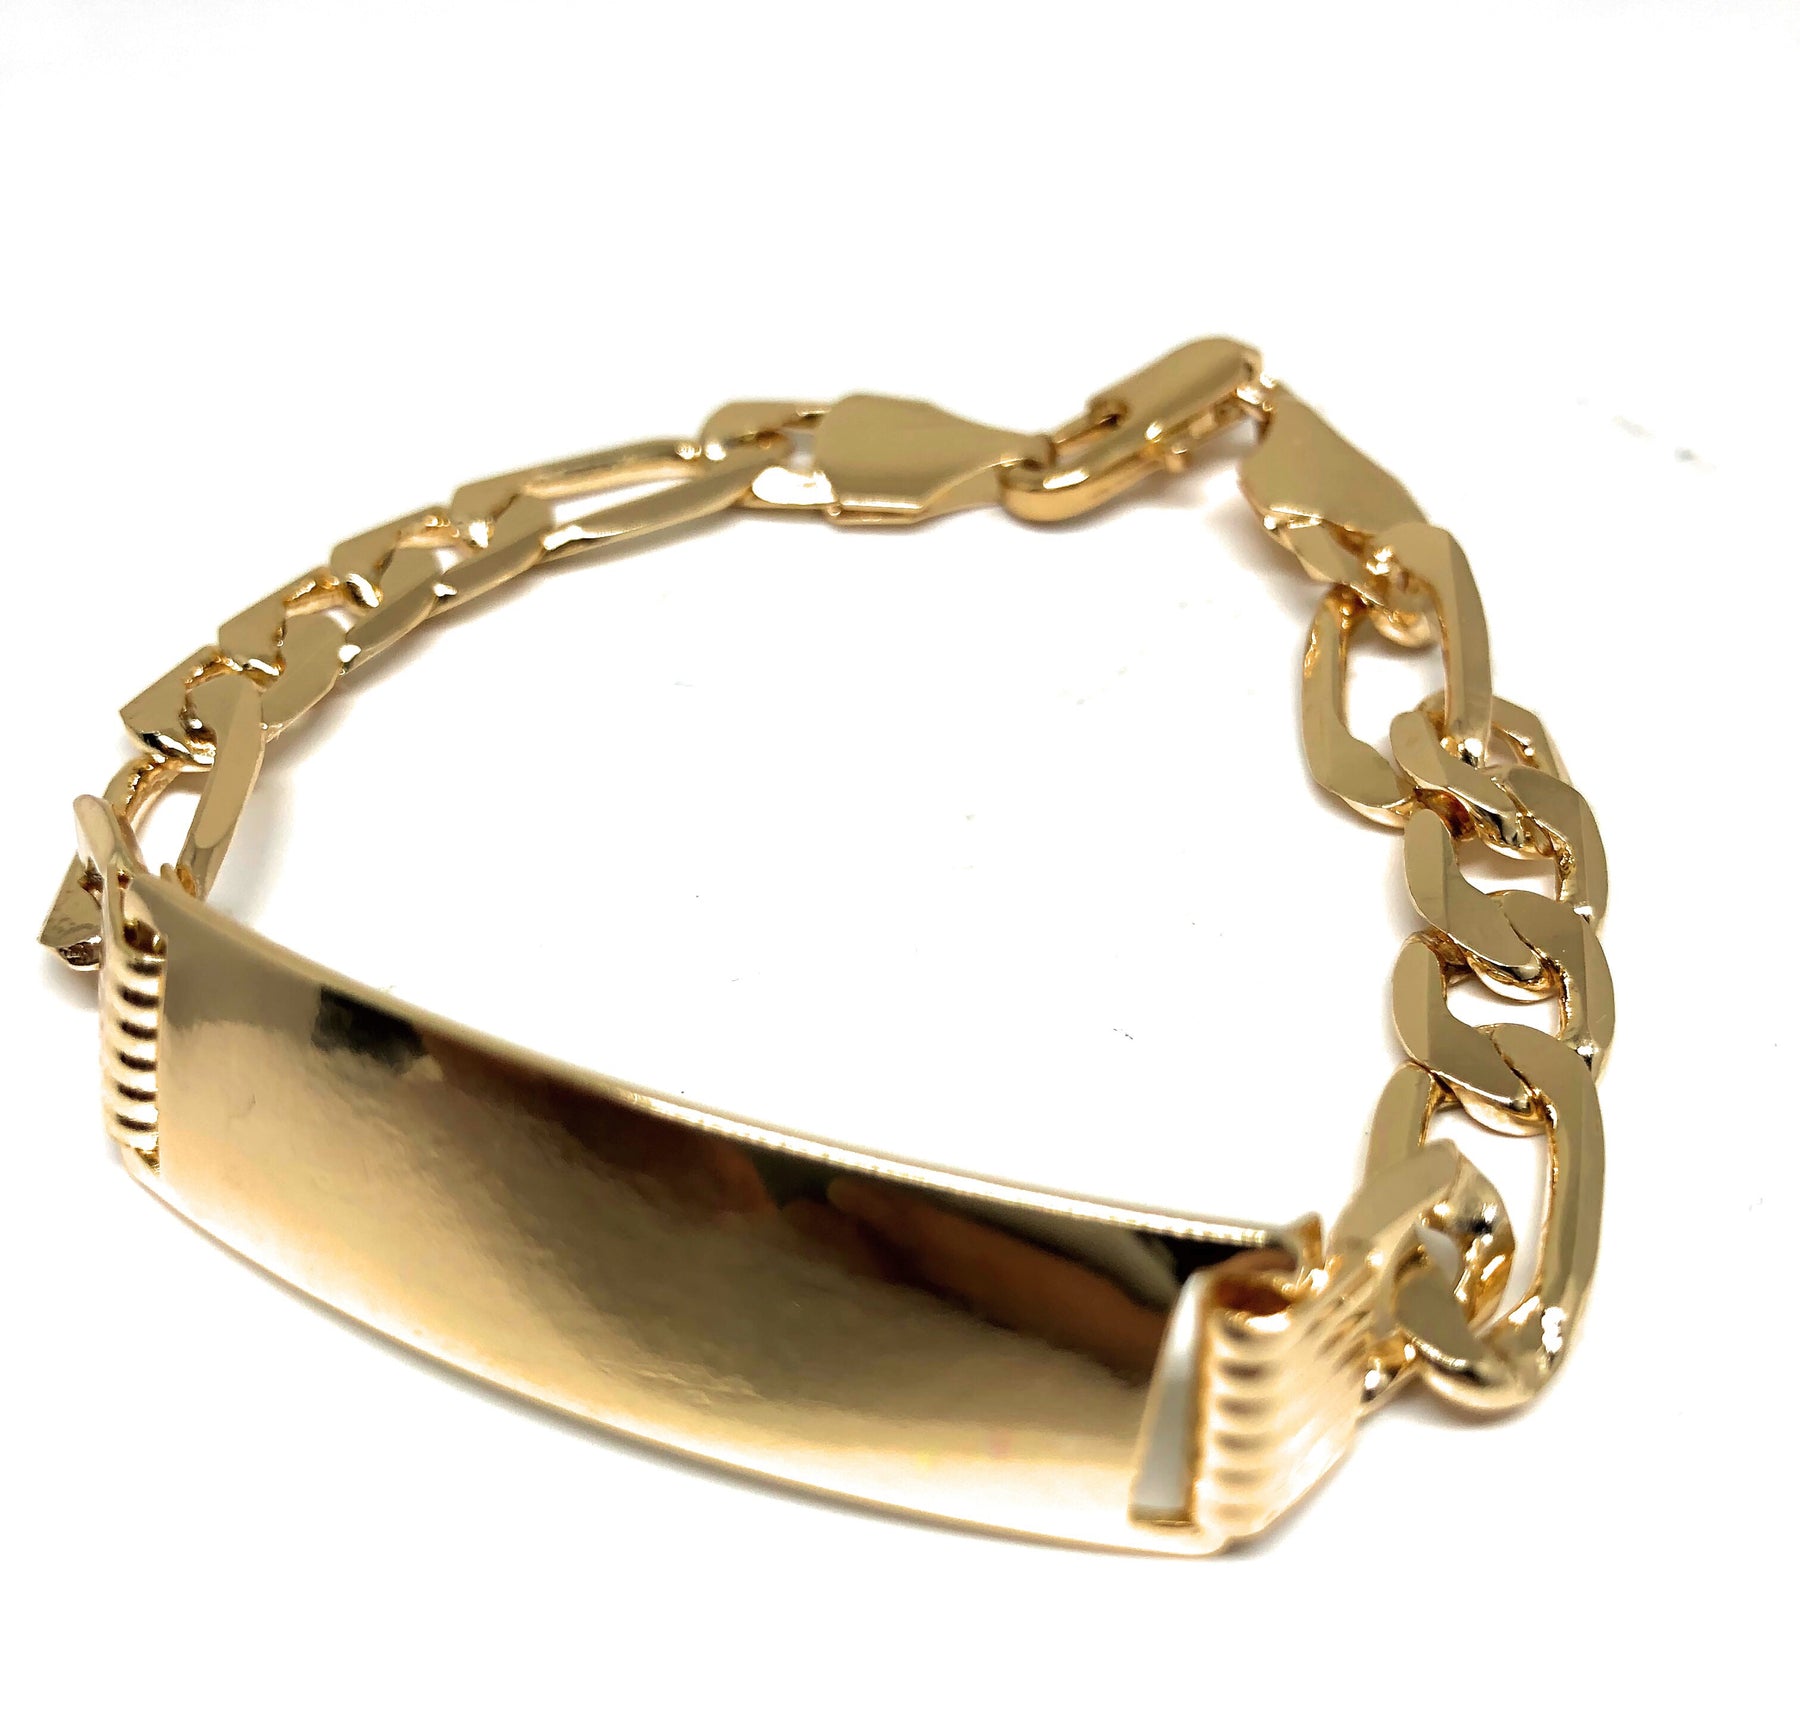 LAURA LOMBARDI Lella gold-plated bracelet | NET-A-PORTER